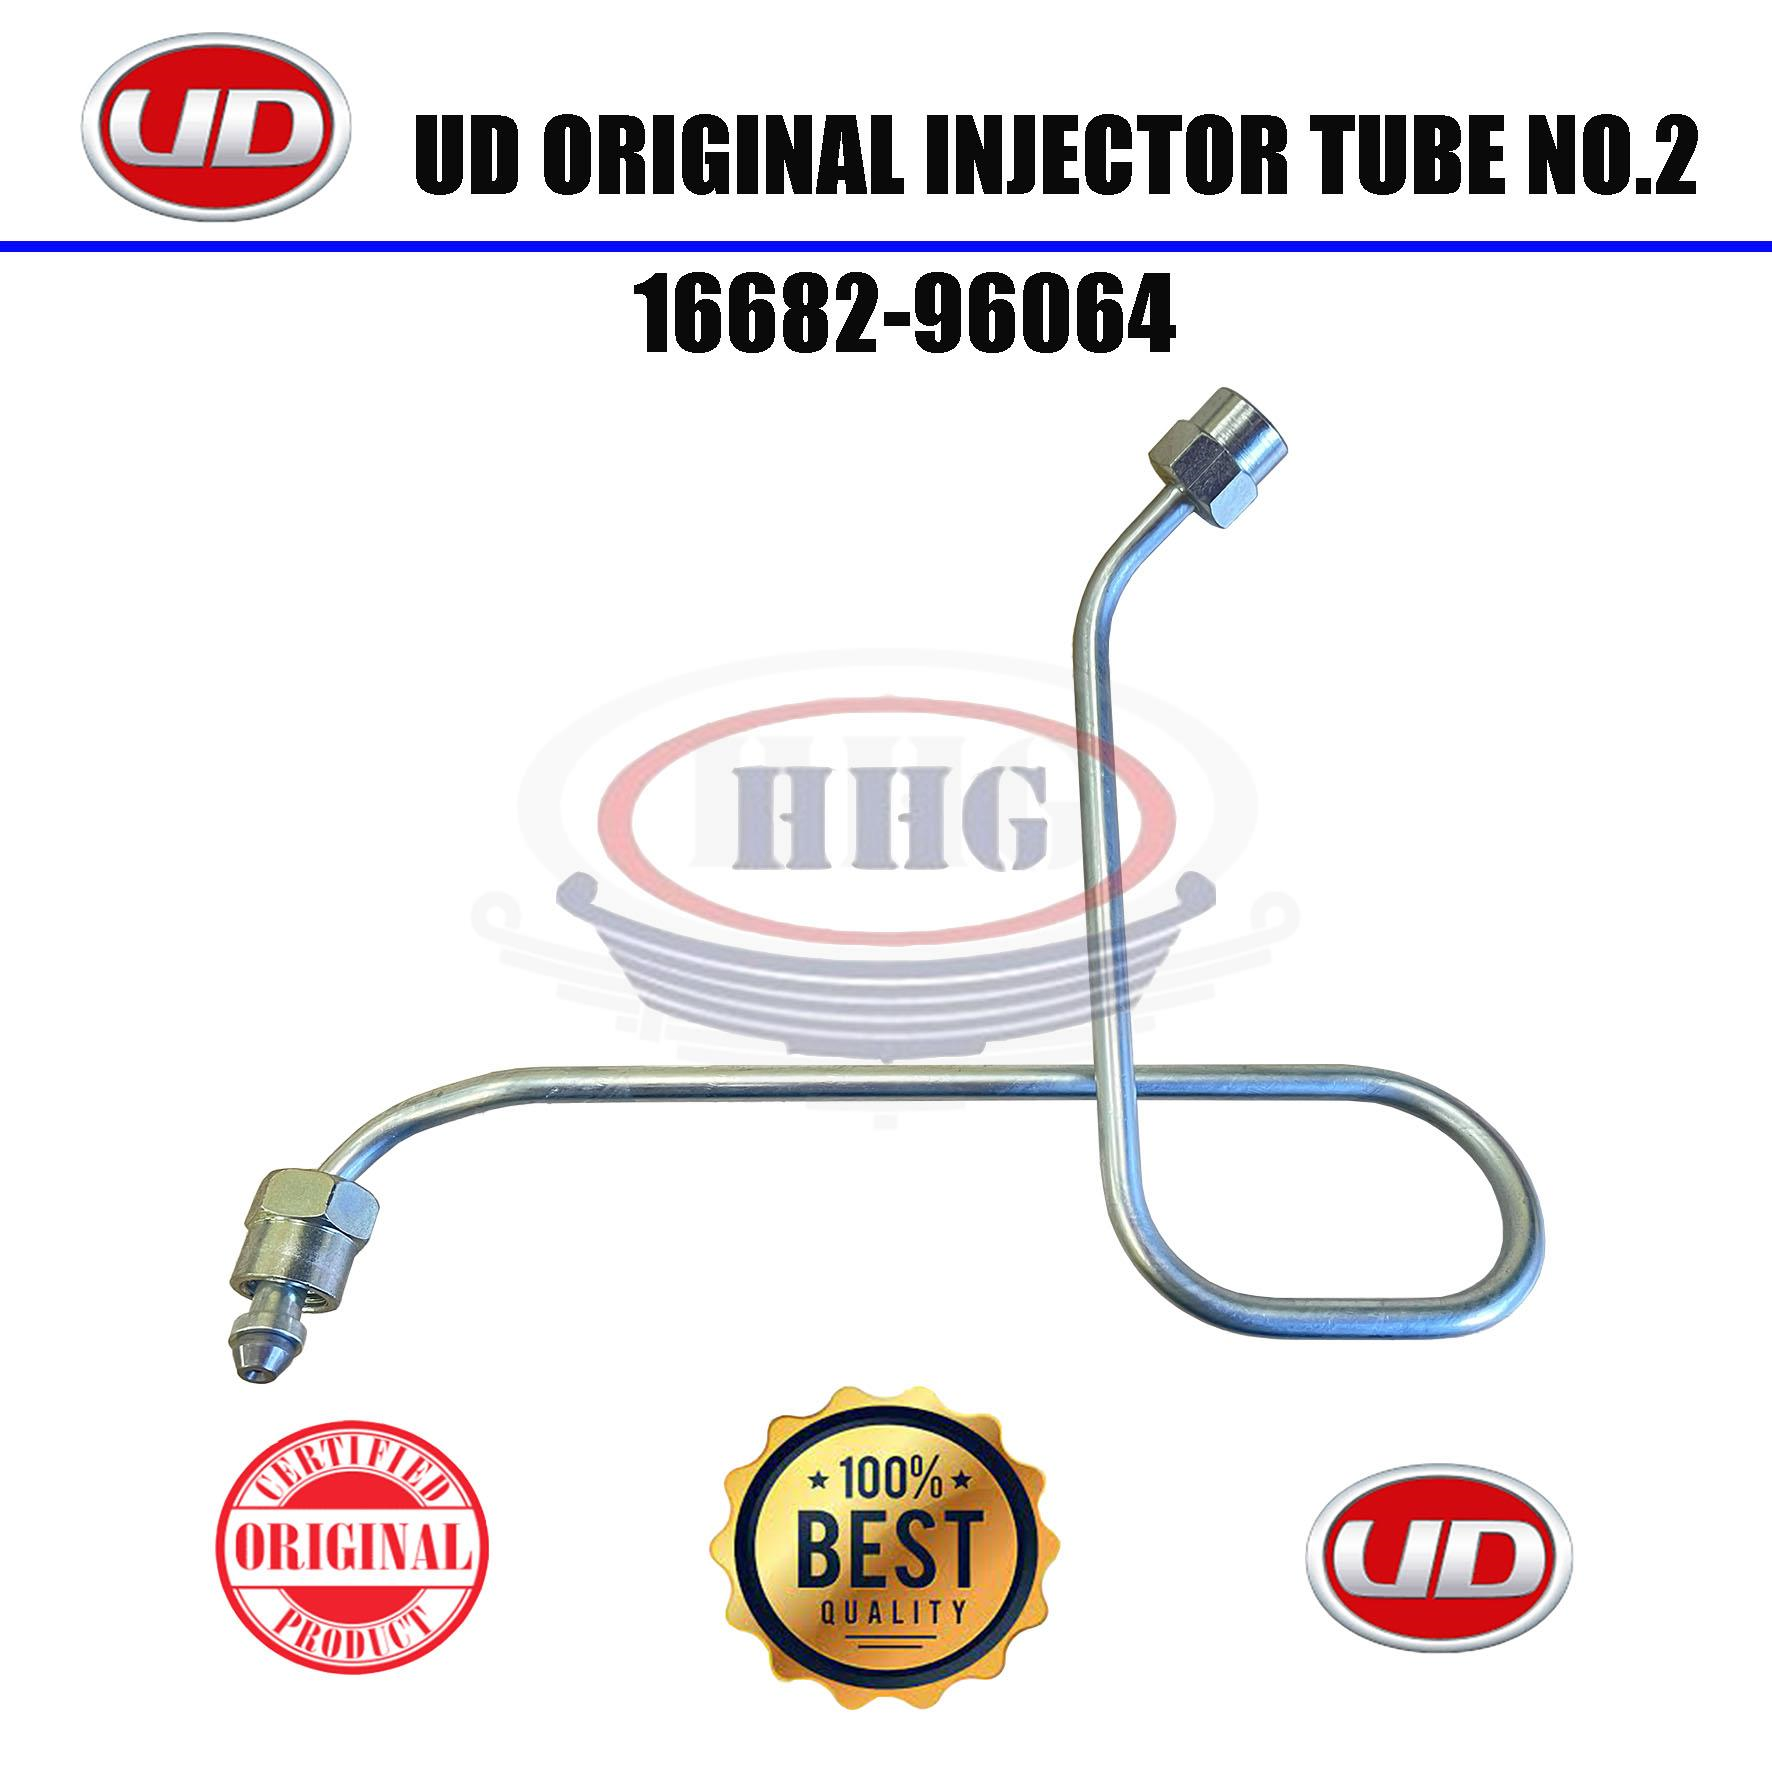 UD Original PE6T Injector Tube No.2 (16682-96064)